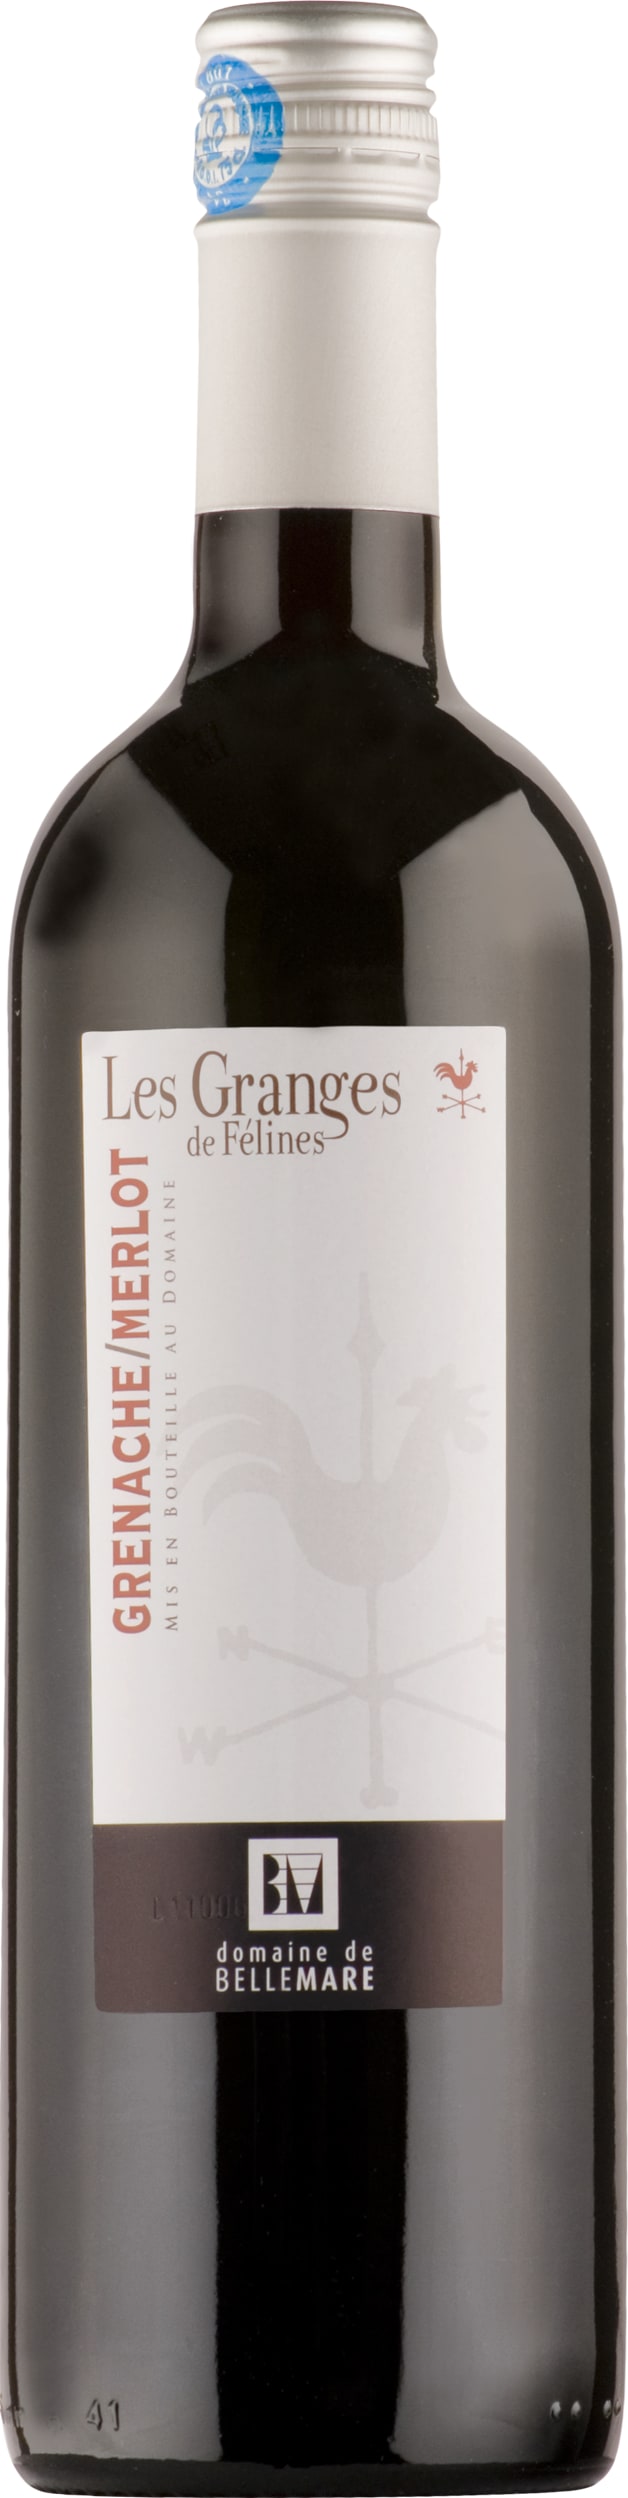 Domaine de Belle Mare Grenache-Merlot, Les Granges de Felines 2021 75cl - Buy Domaine de Belle Mare Wines from GREAT WINES DIRECT wine shop